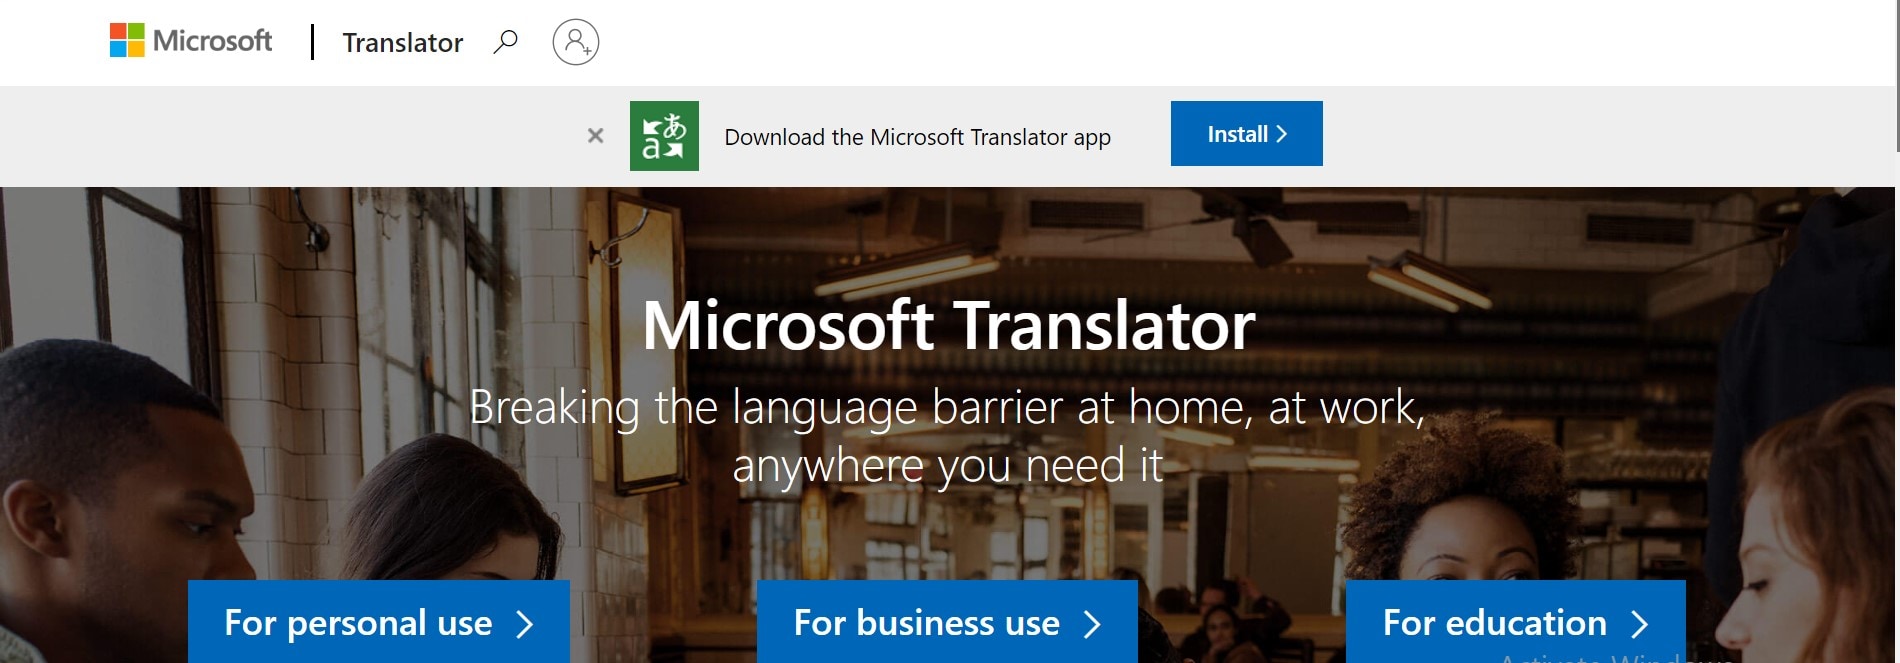 Microsoft translator for Ukrainian to English translation